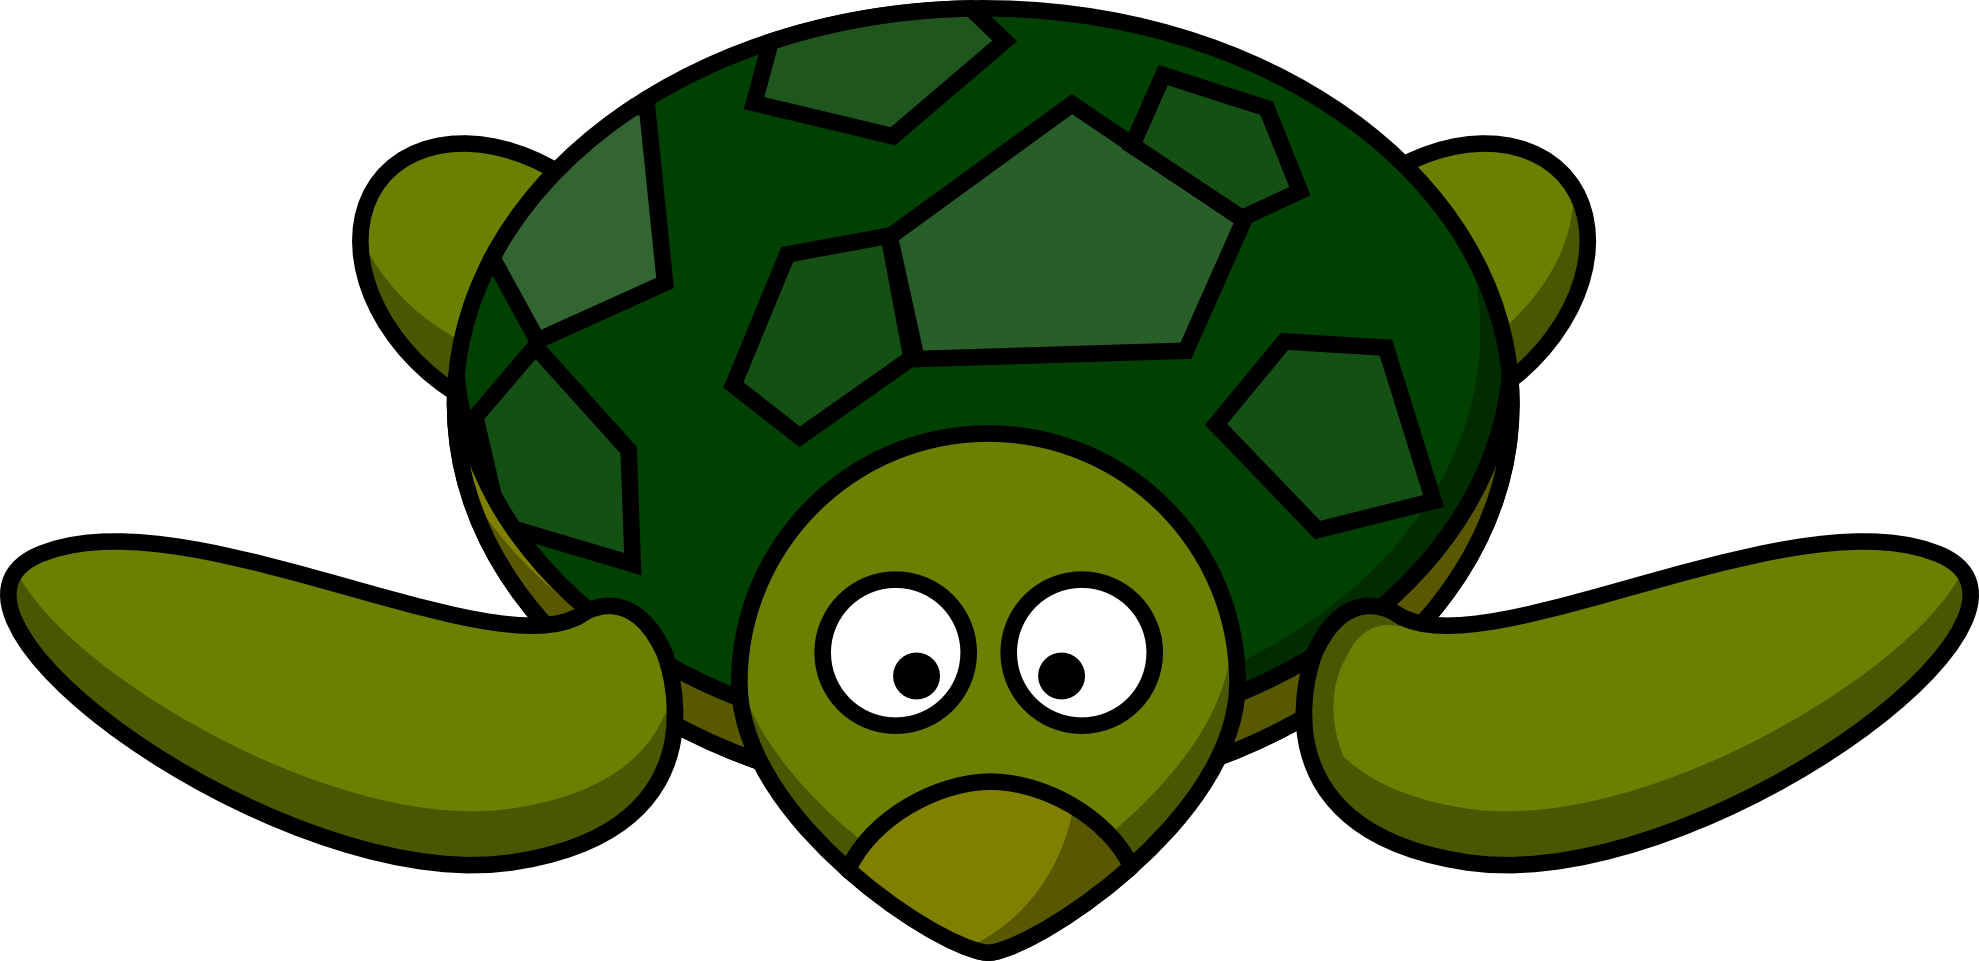 Turtle clip art free. Footprint clipart tortoise